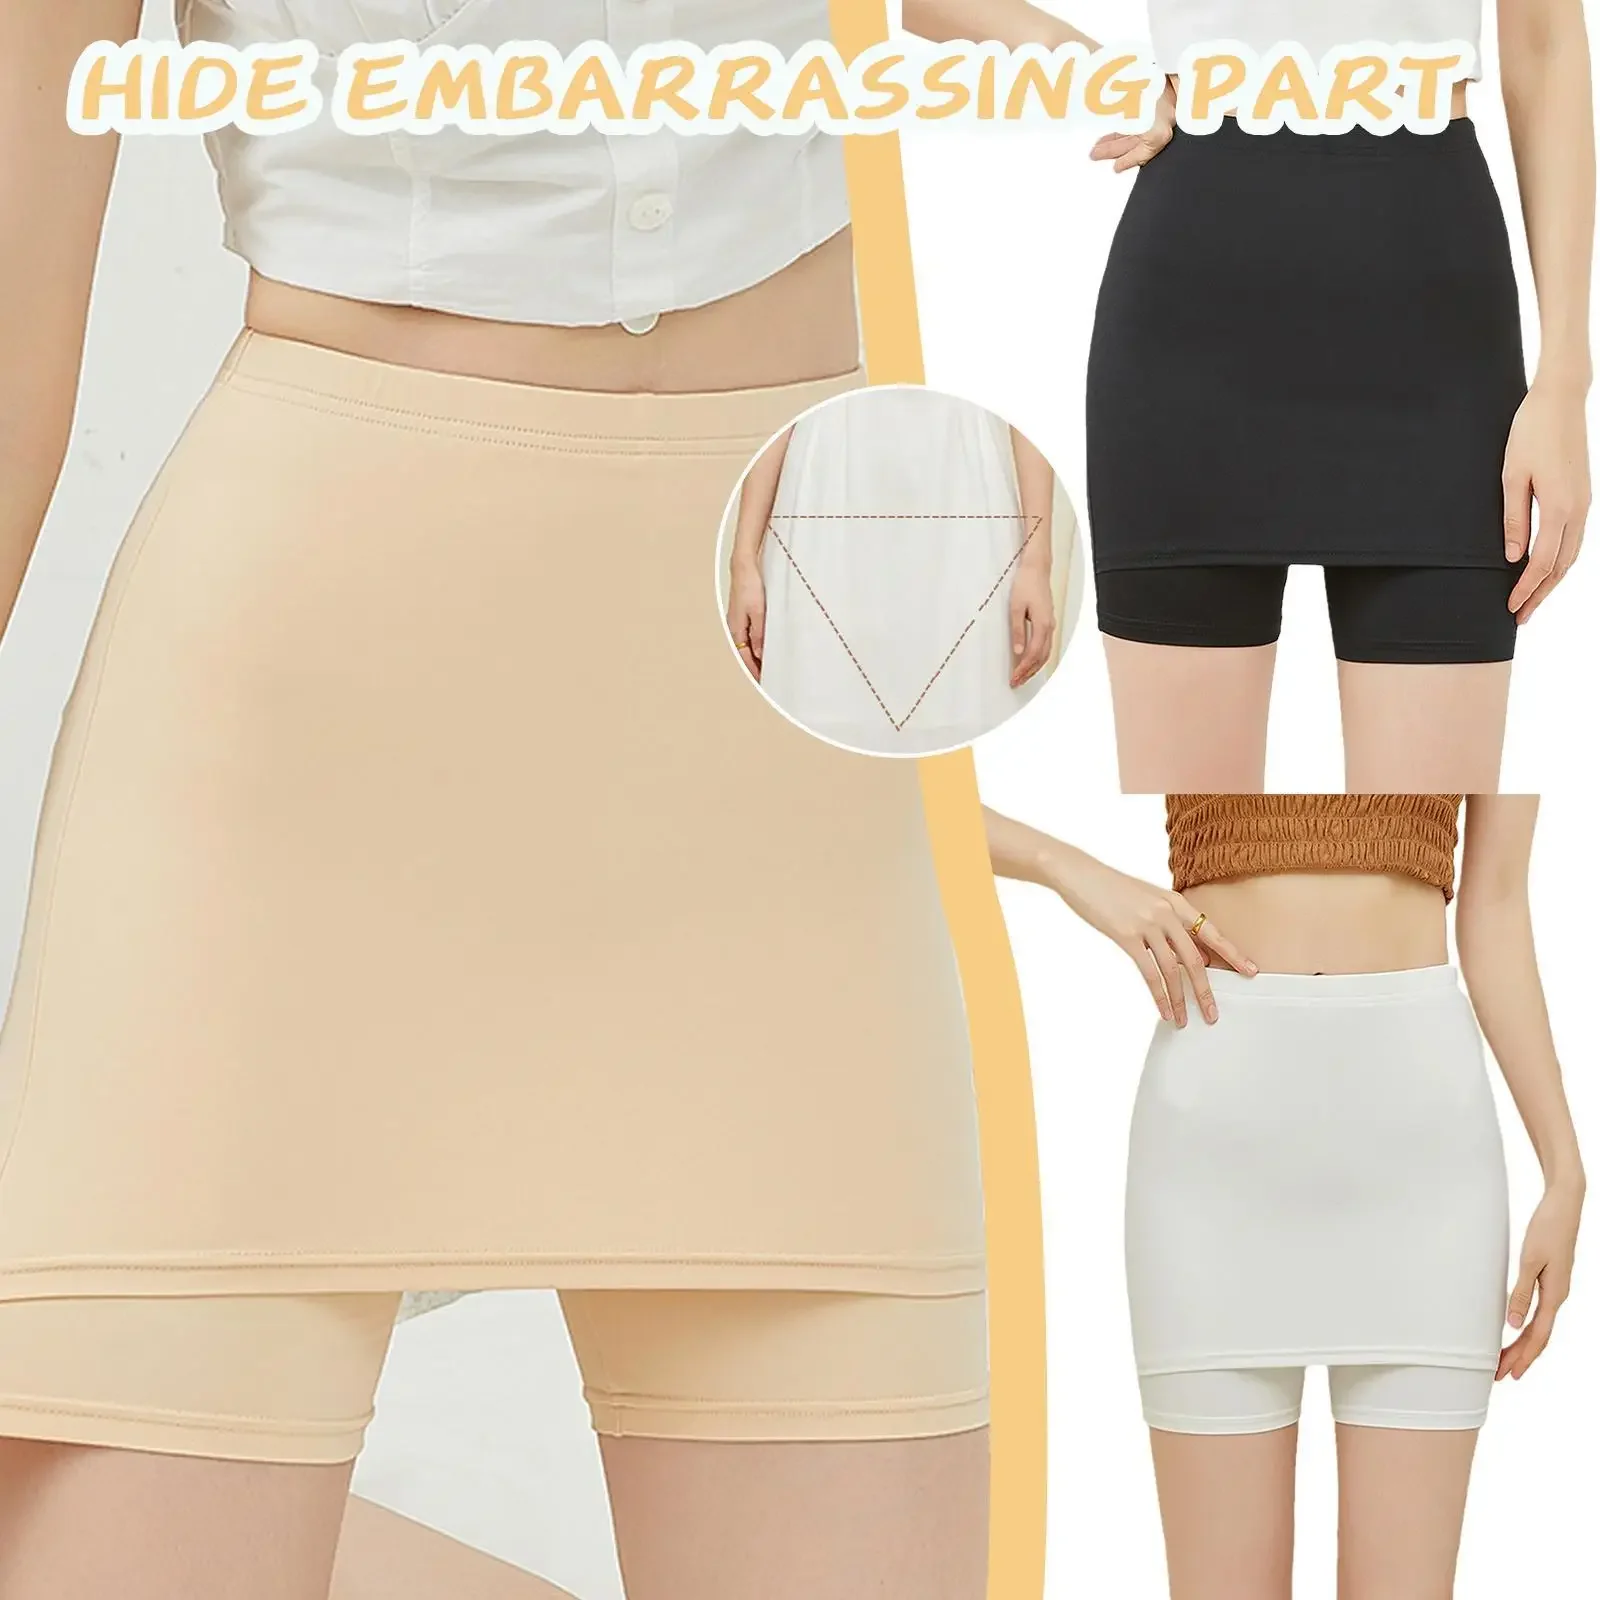 

Flarixa Ice Silk High Waist Safety Pants Boxer Women Thin Sliming Fit Women's Summer Shorts Double Layer Seamless Skirt Shorts